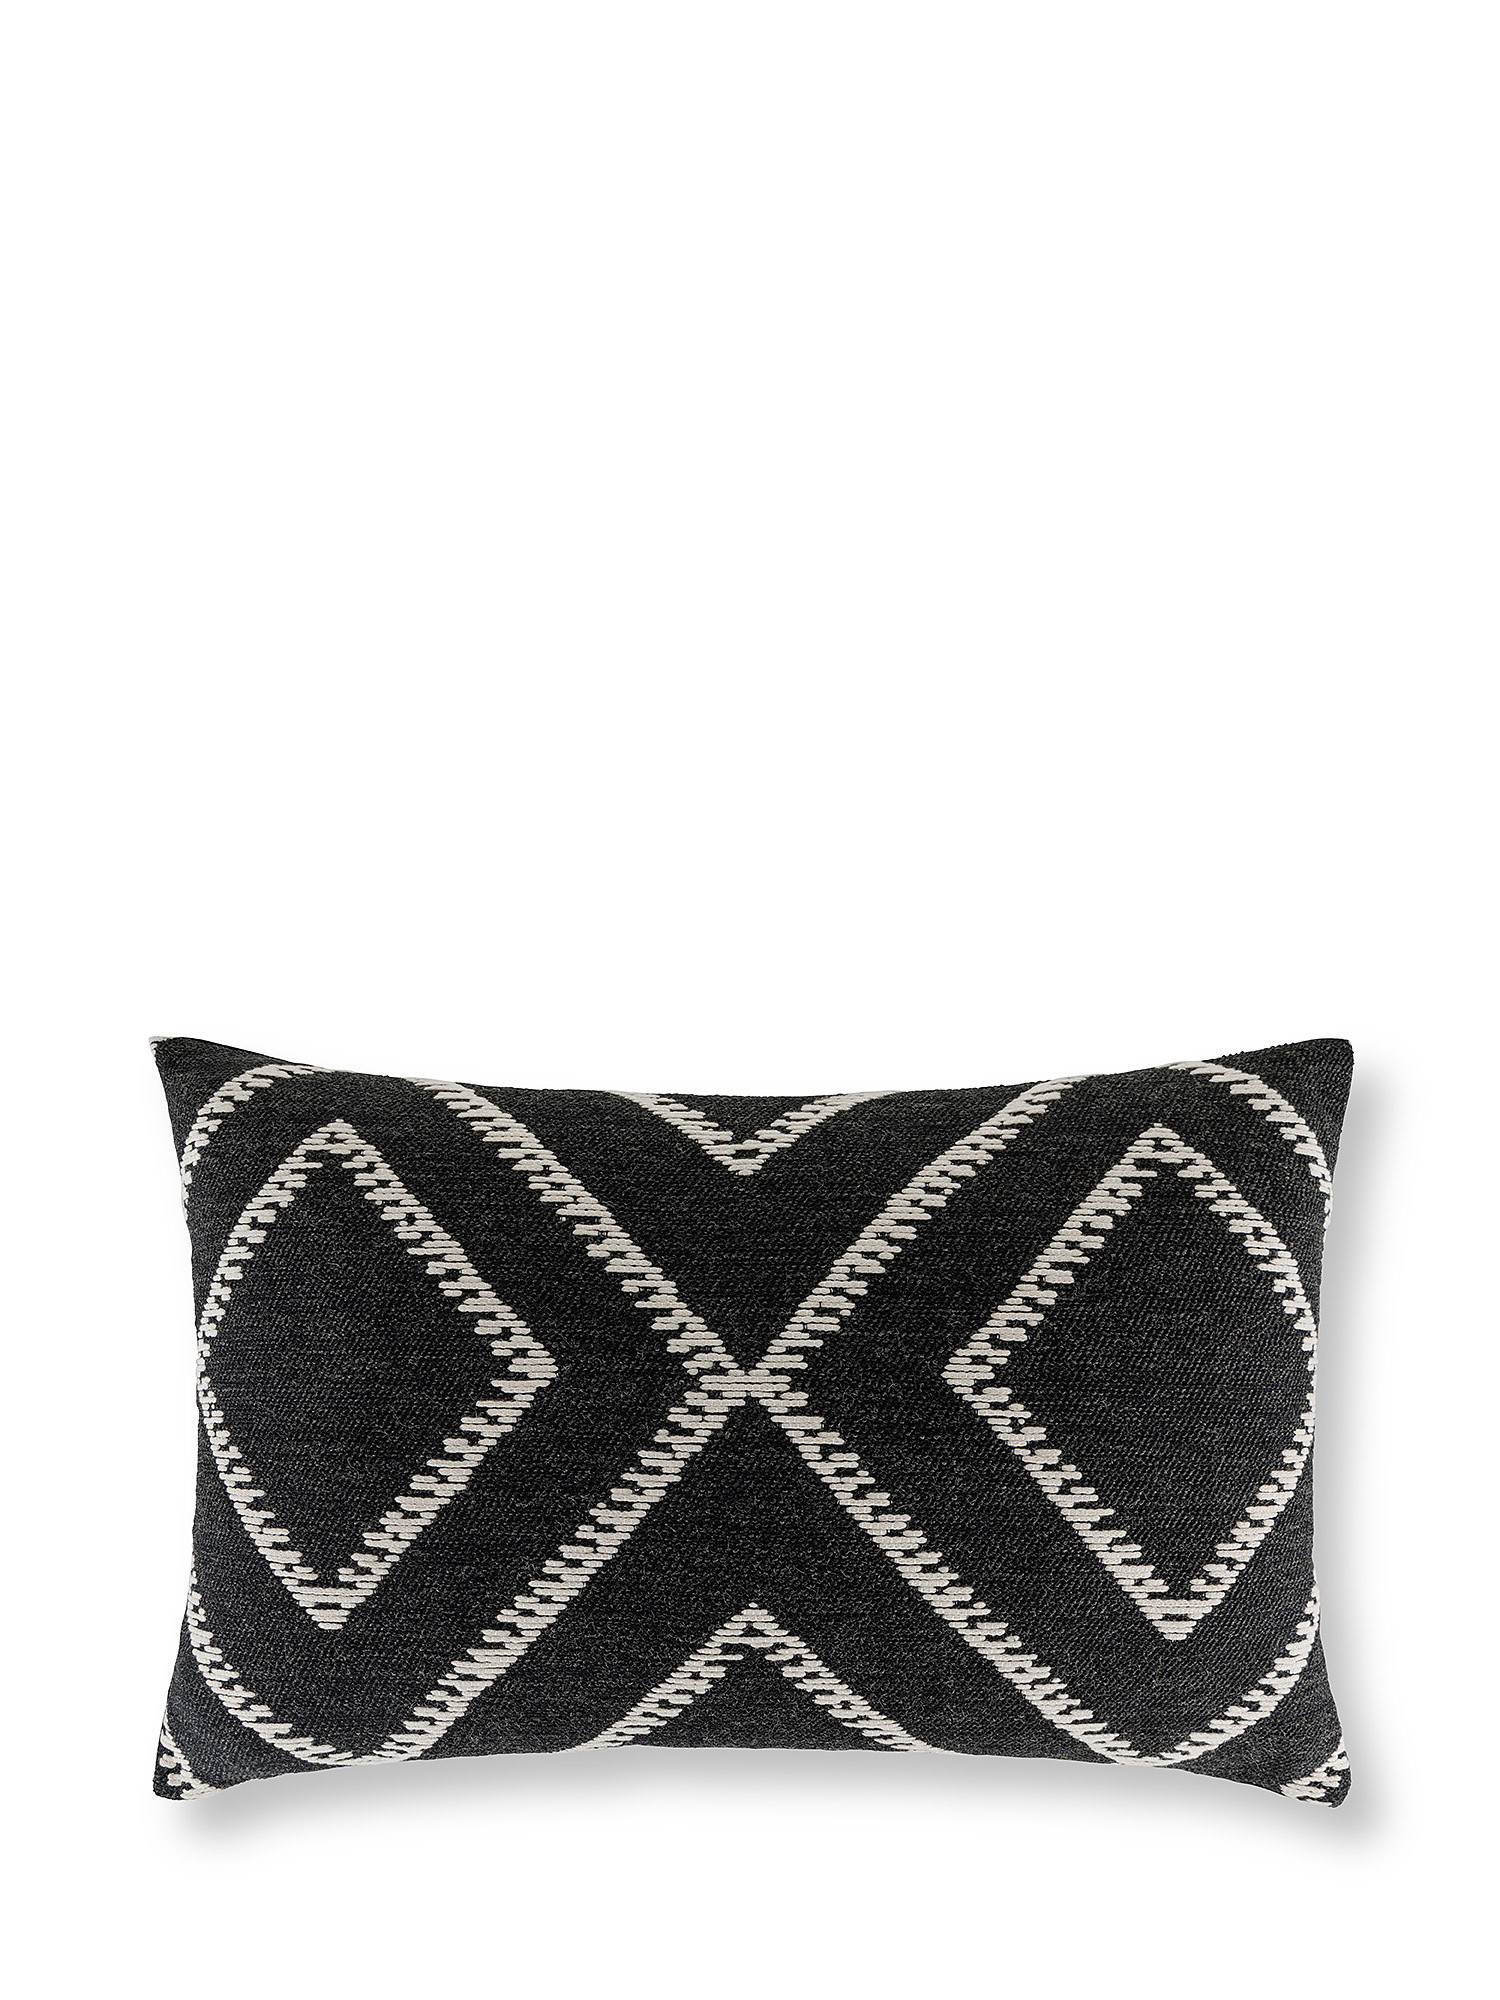 Jacquard cushion with geometric pattern 35x55cm, Black, large image number 0